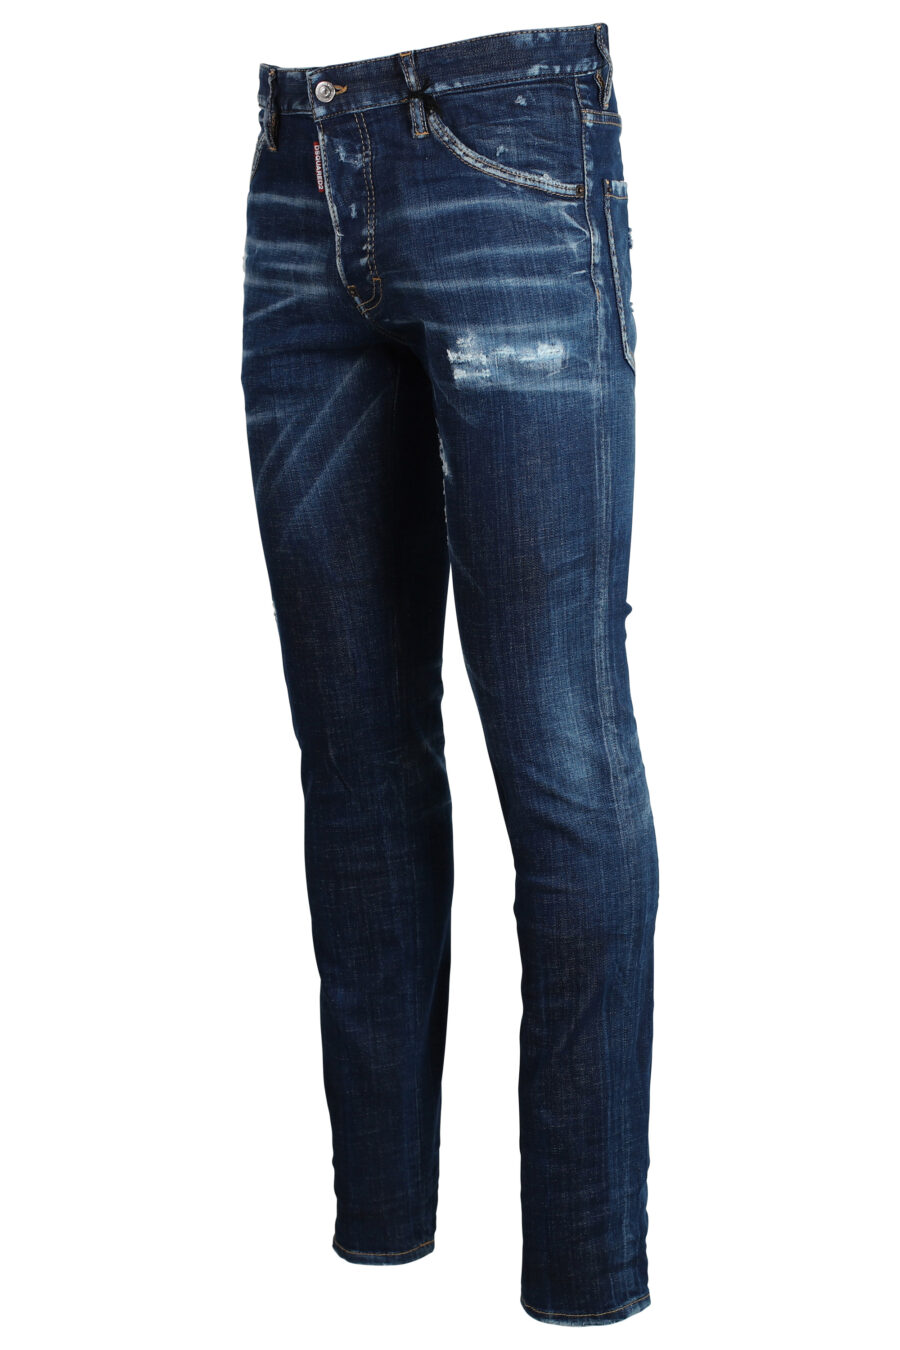 Jeans "Icon cool guy" bleu foncé semi-usé - 8052134643259 2